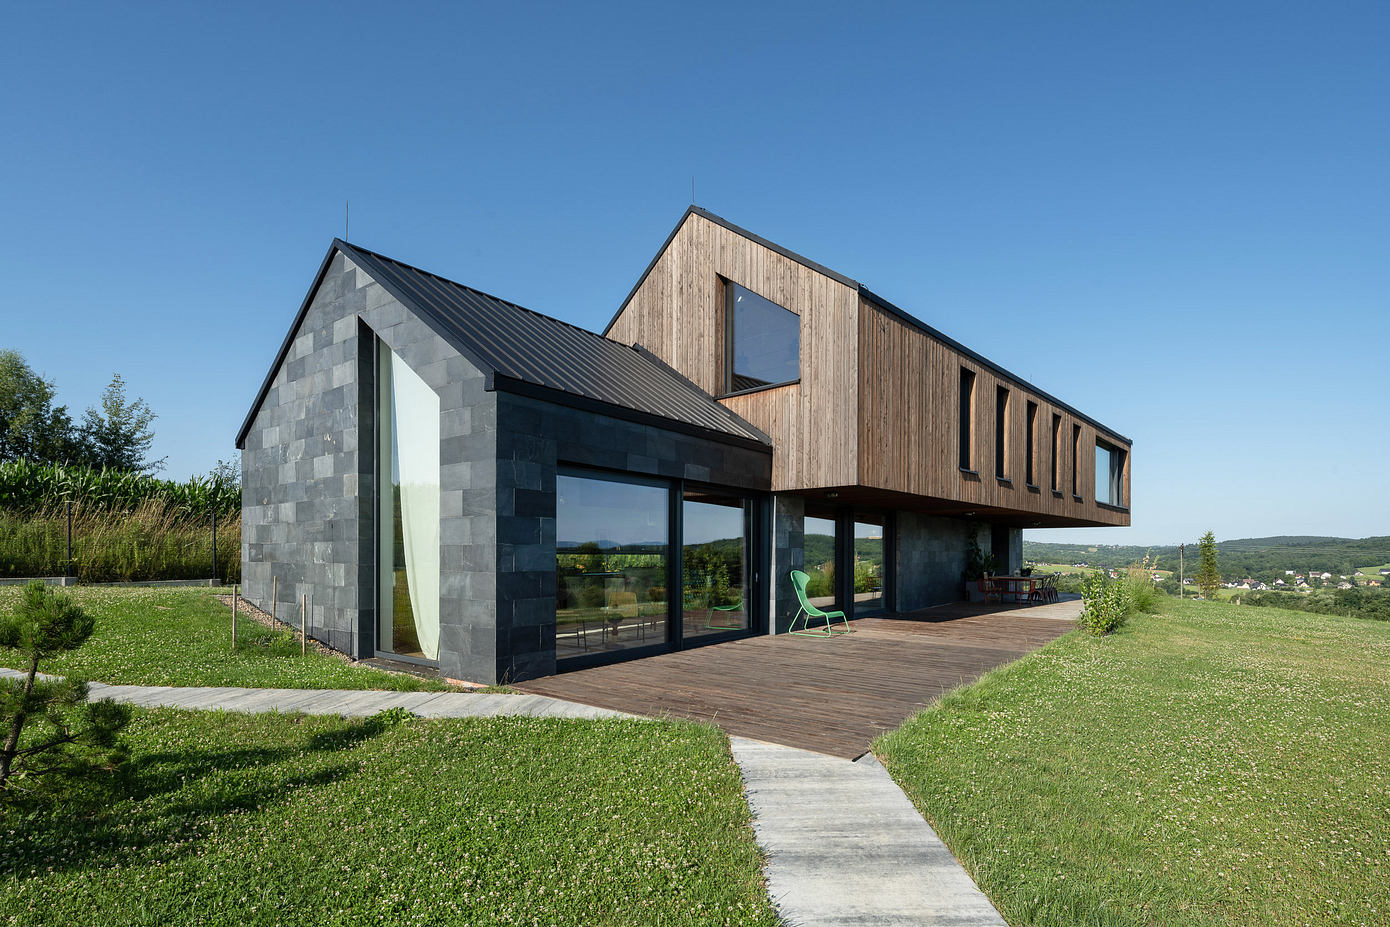 Hillside House: Where Modern Style Meets Rustic Environment